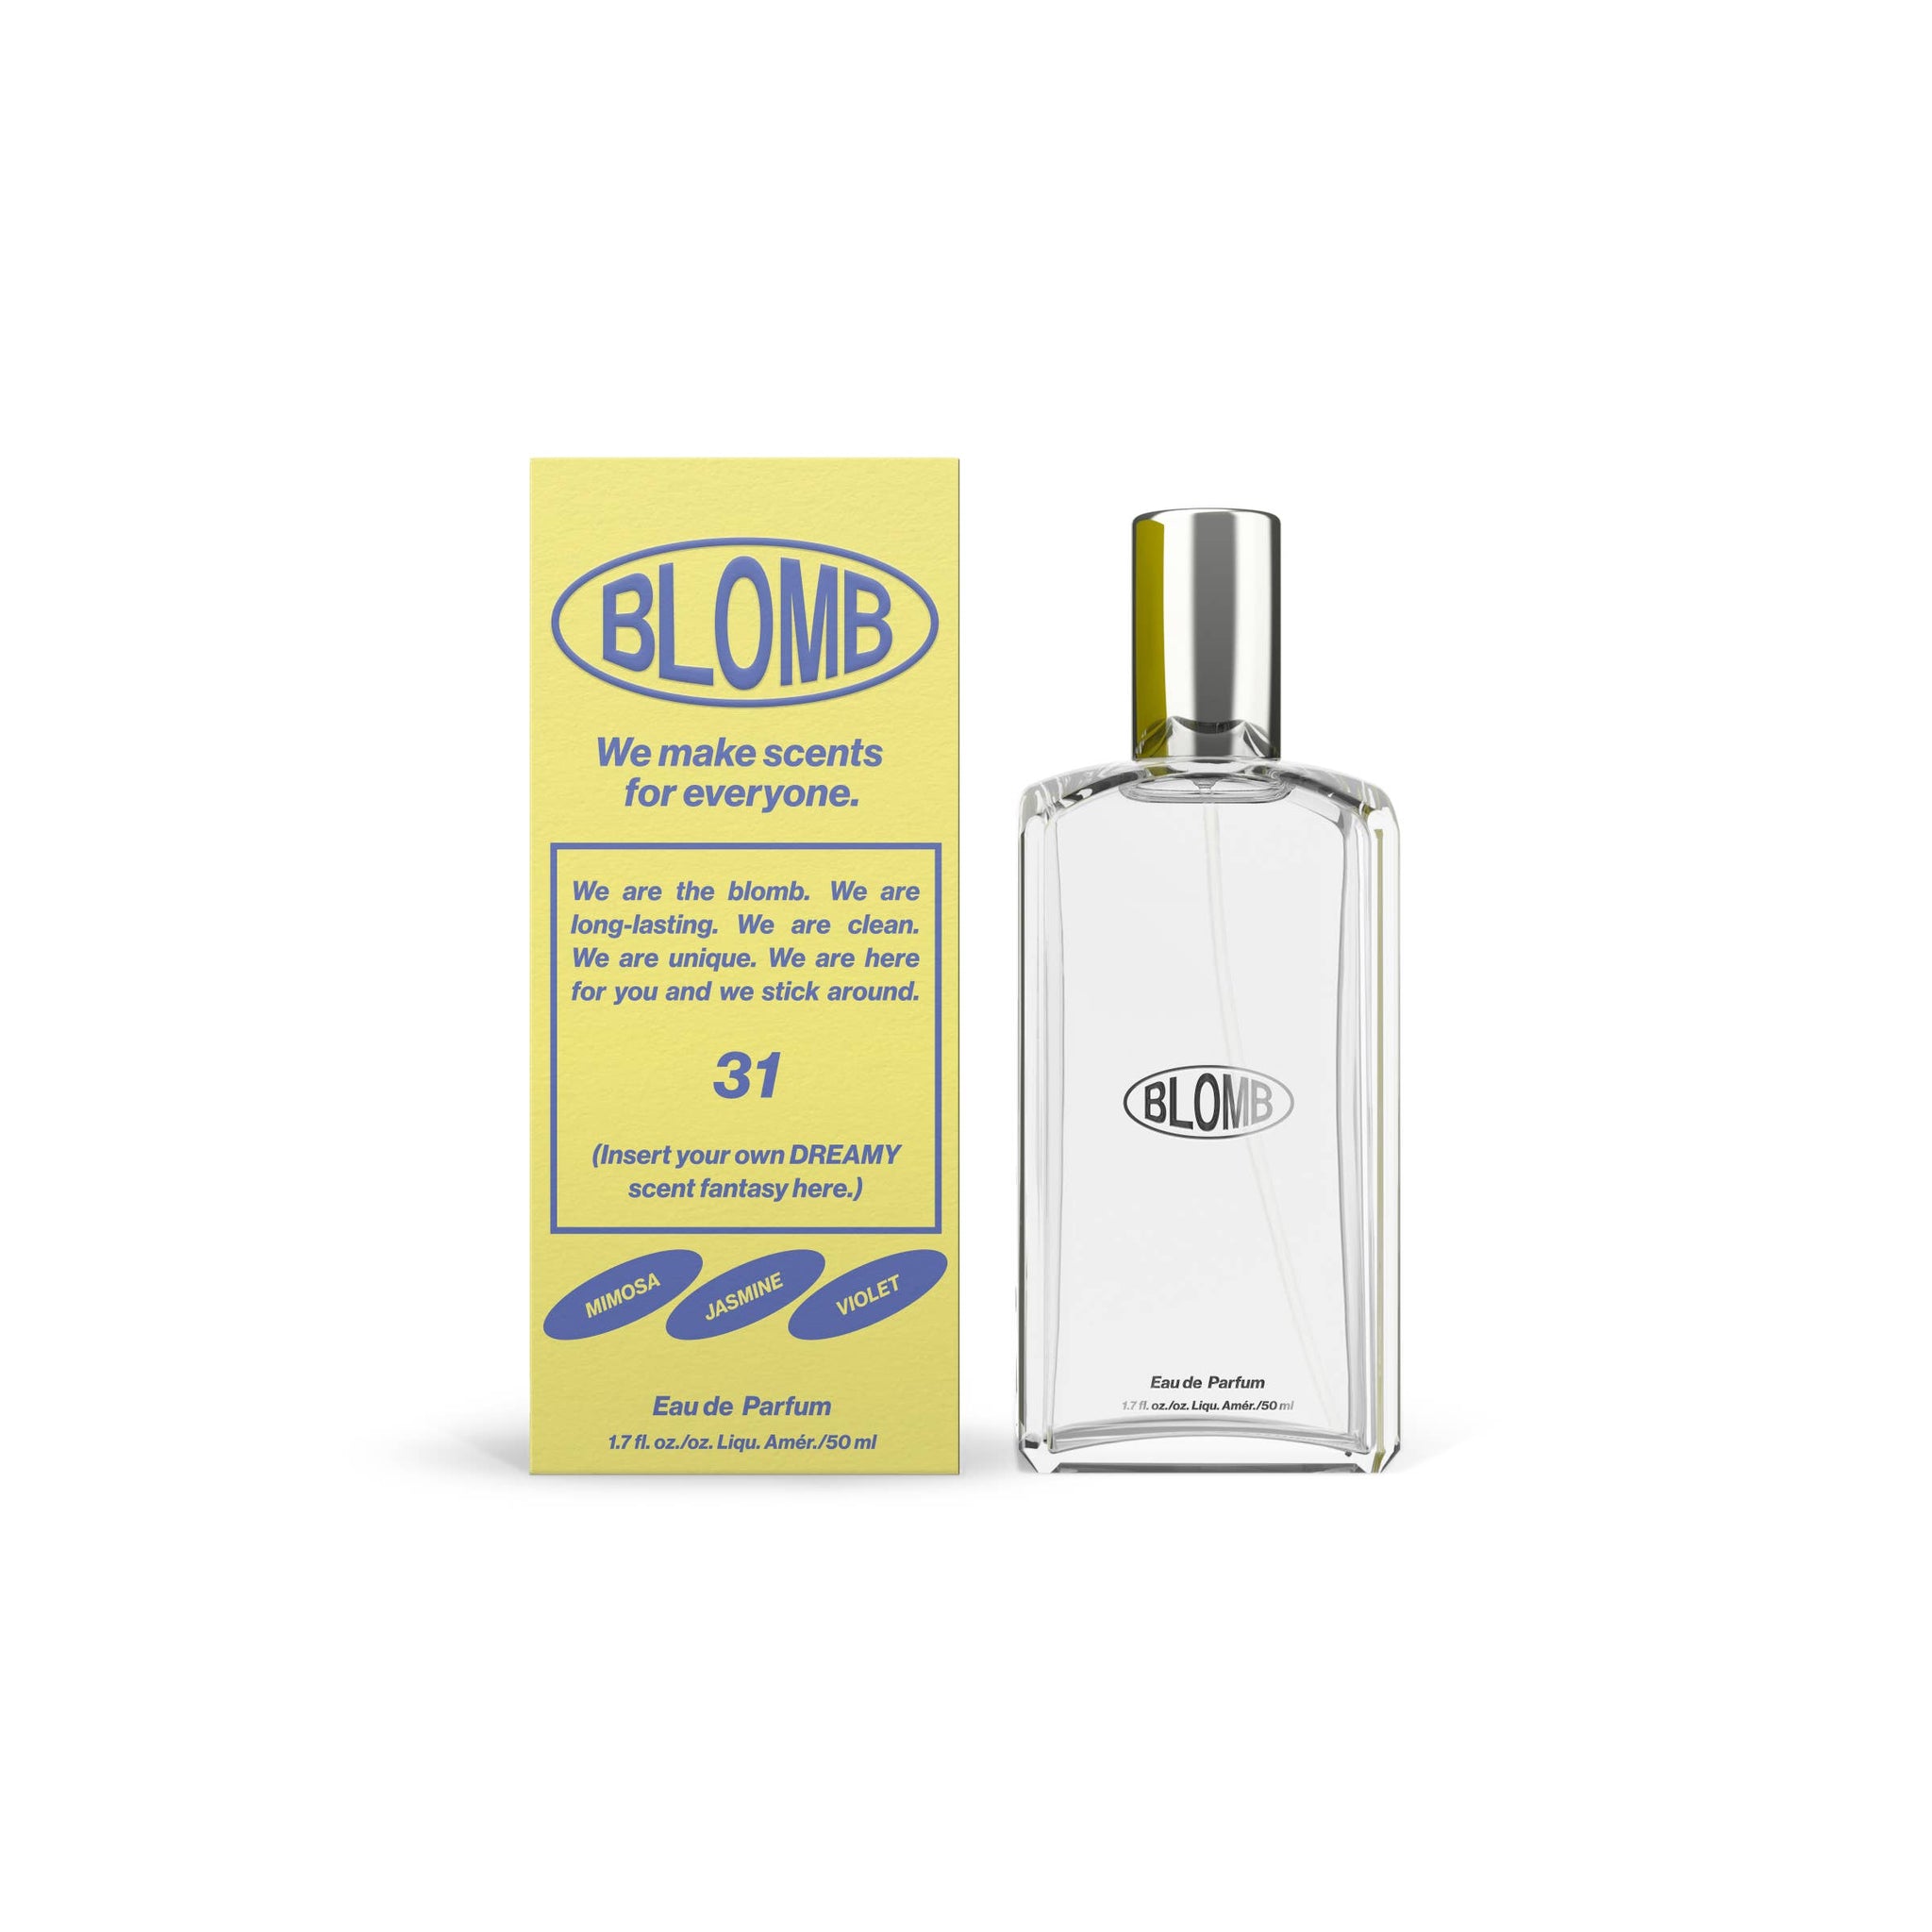 Blomb No. 31 Eau de Parfum